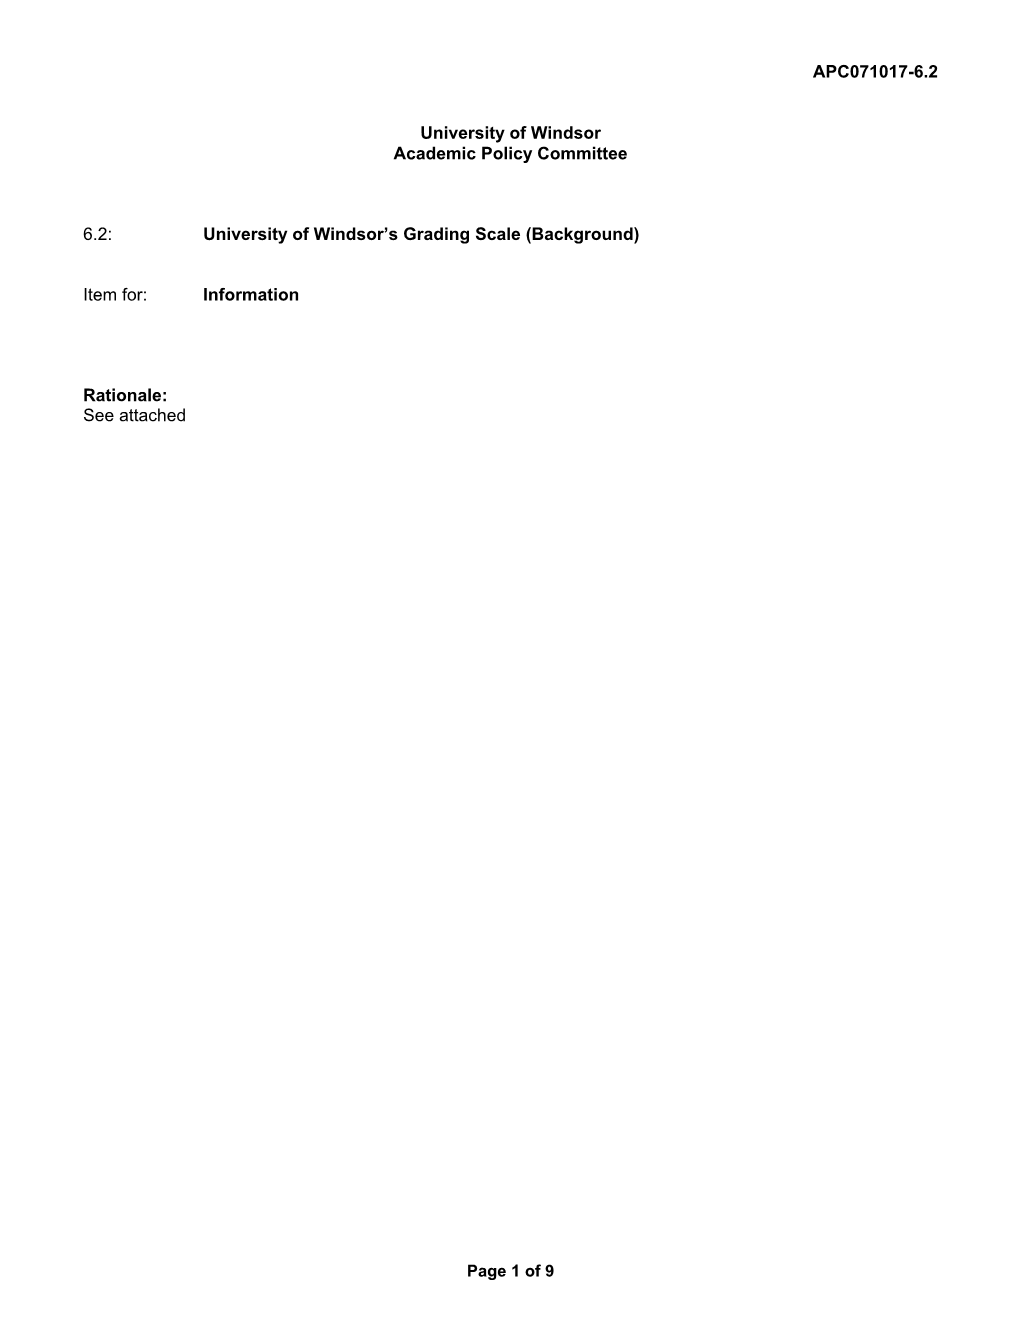 APC071017-6.2 University of Windsor Academic Policy Committee